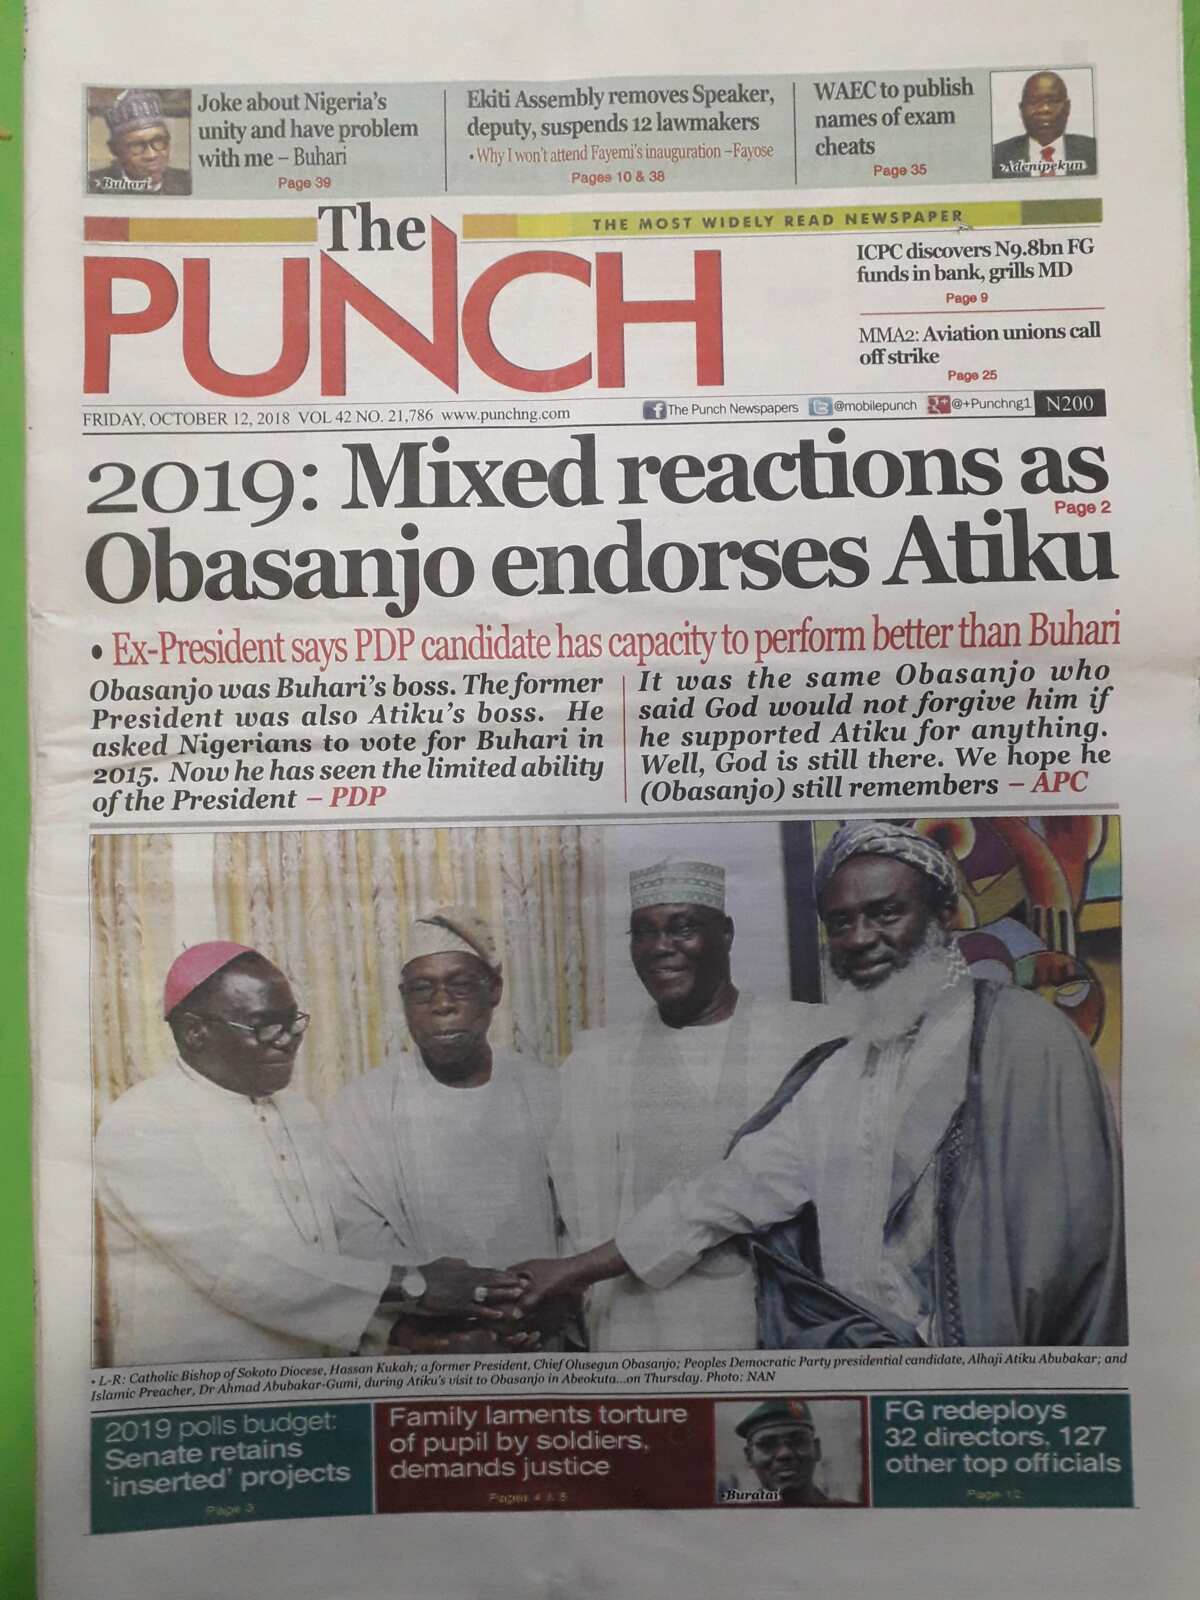 2019: battle for presidency intensifies as obj endorses atiku